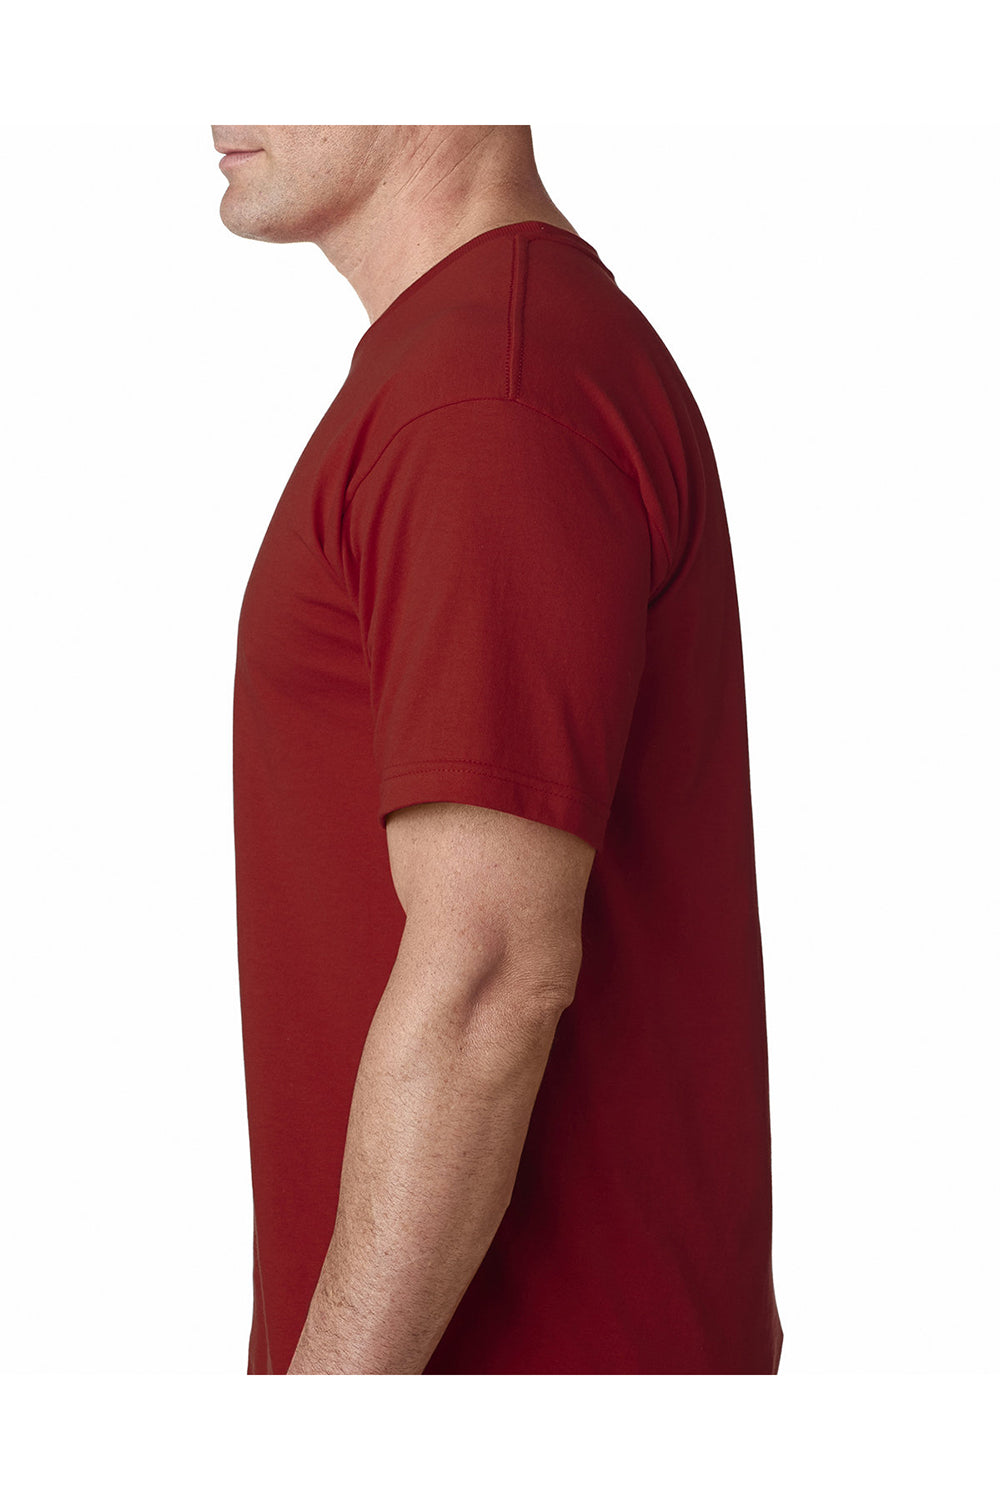 Bayside BA5040 Mens USA Made Short Sleeve Crewneck T-Shirt Cardinal Red Model Side